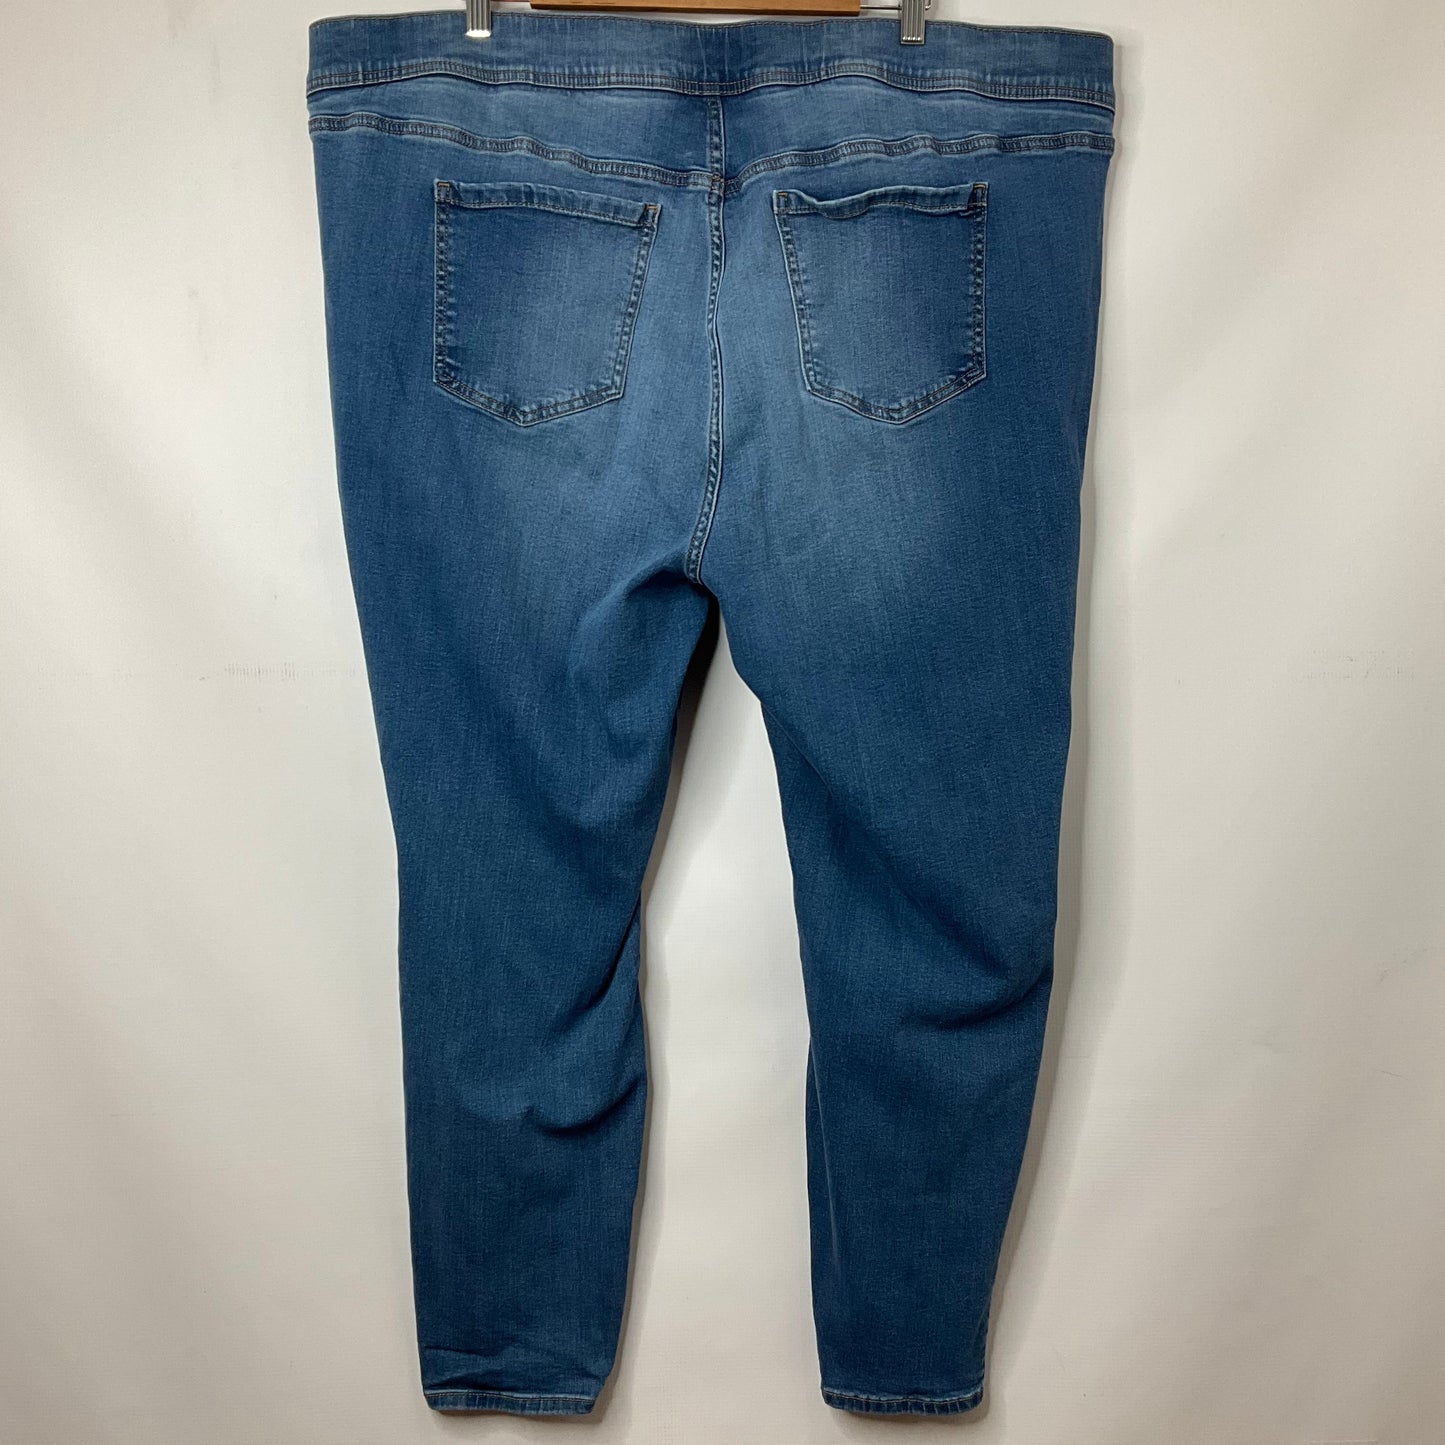 Blue Denim Jeans Jeggings Torrid, Size 4x